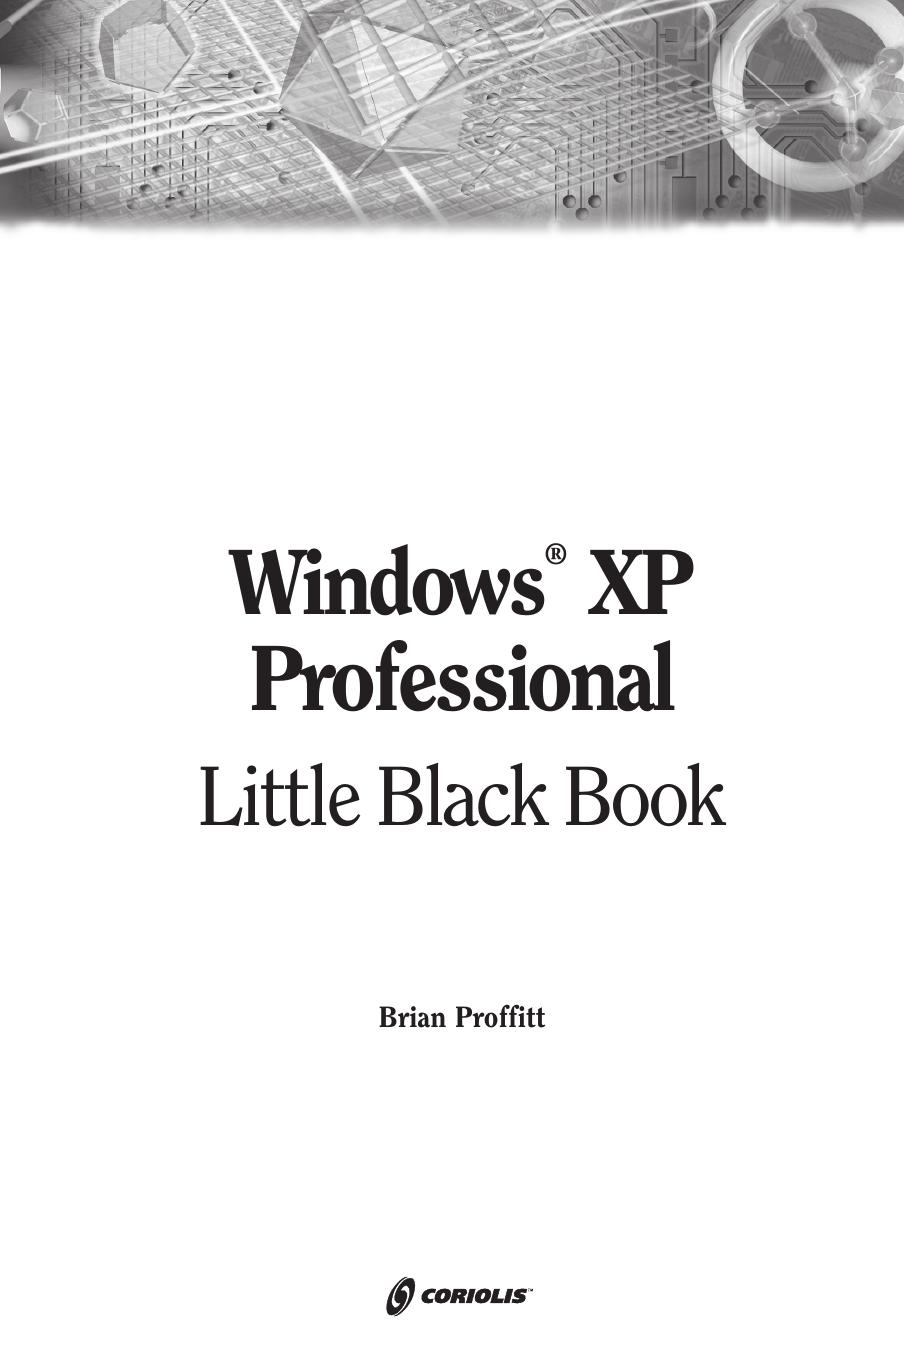 Windows XP Professional Little Black Book by Brian Proffitt